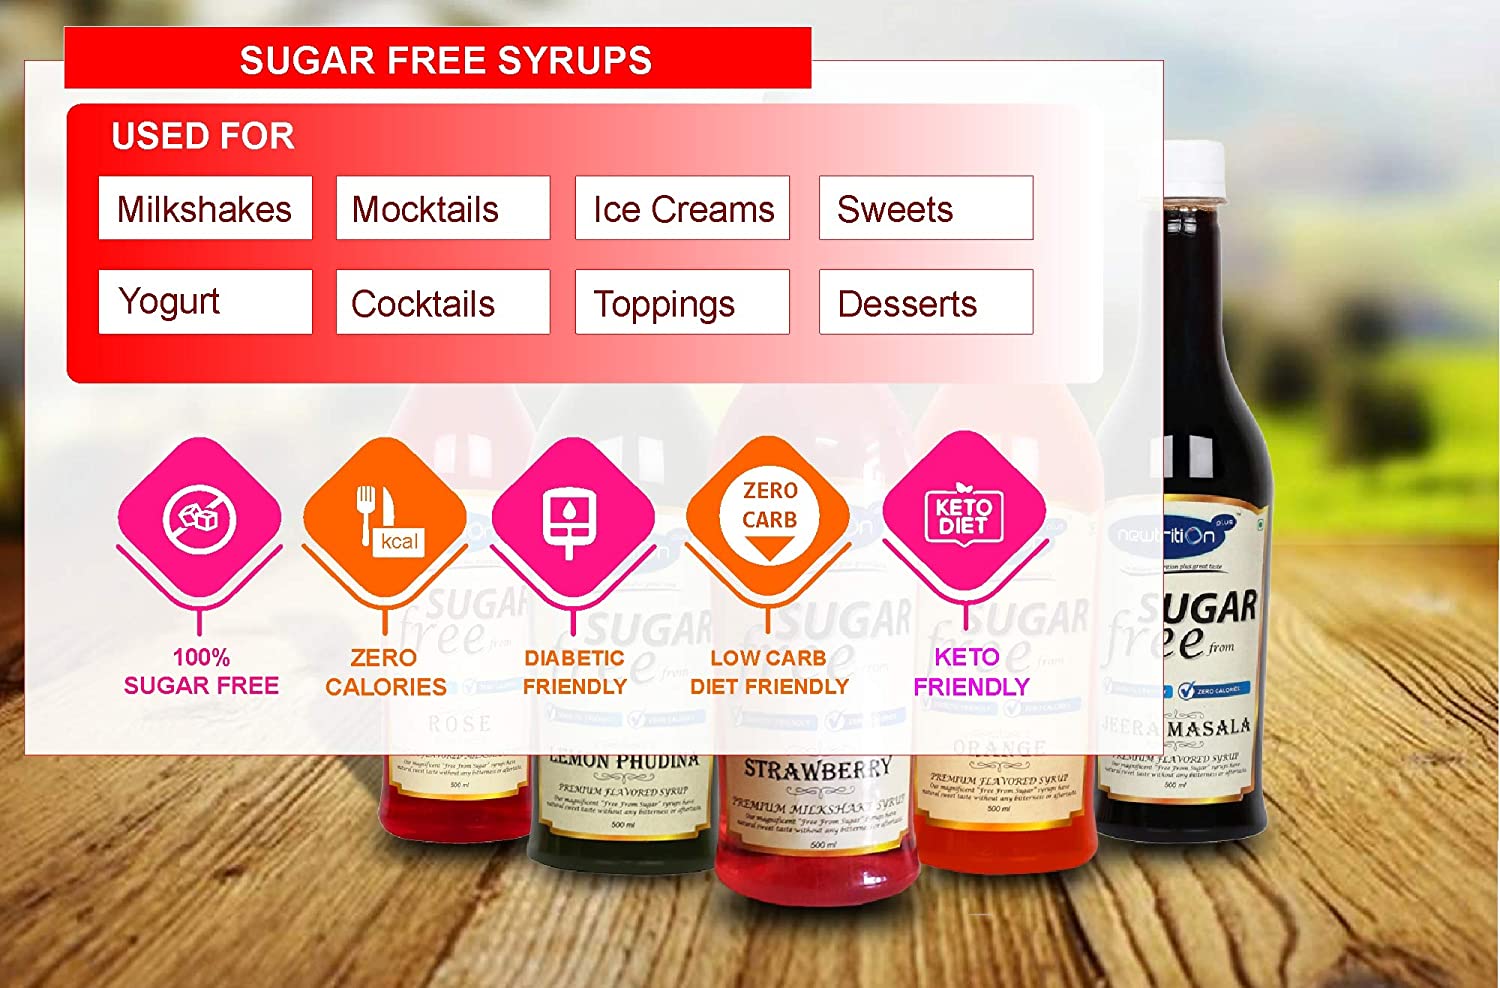  Zero Calorie Syrup, Sugar Free, Butterscotch 400ml by